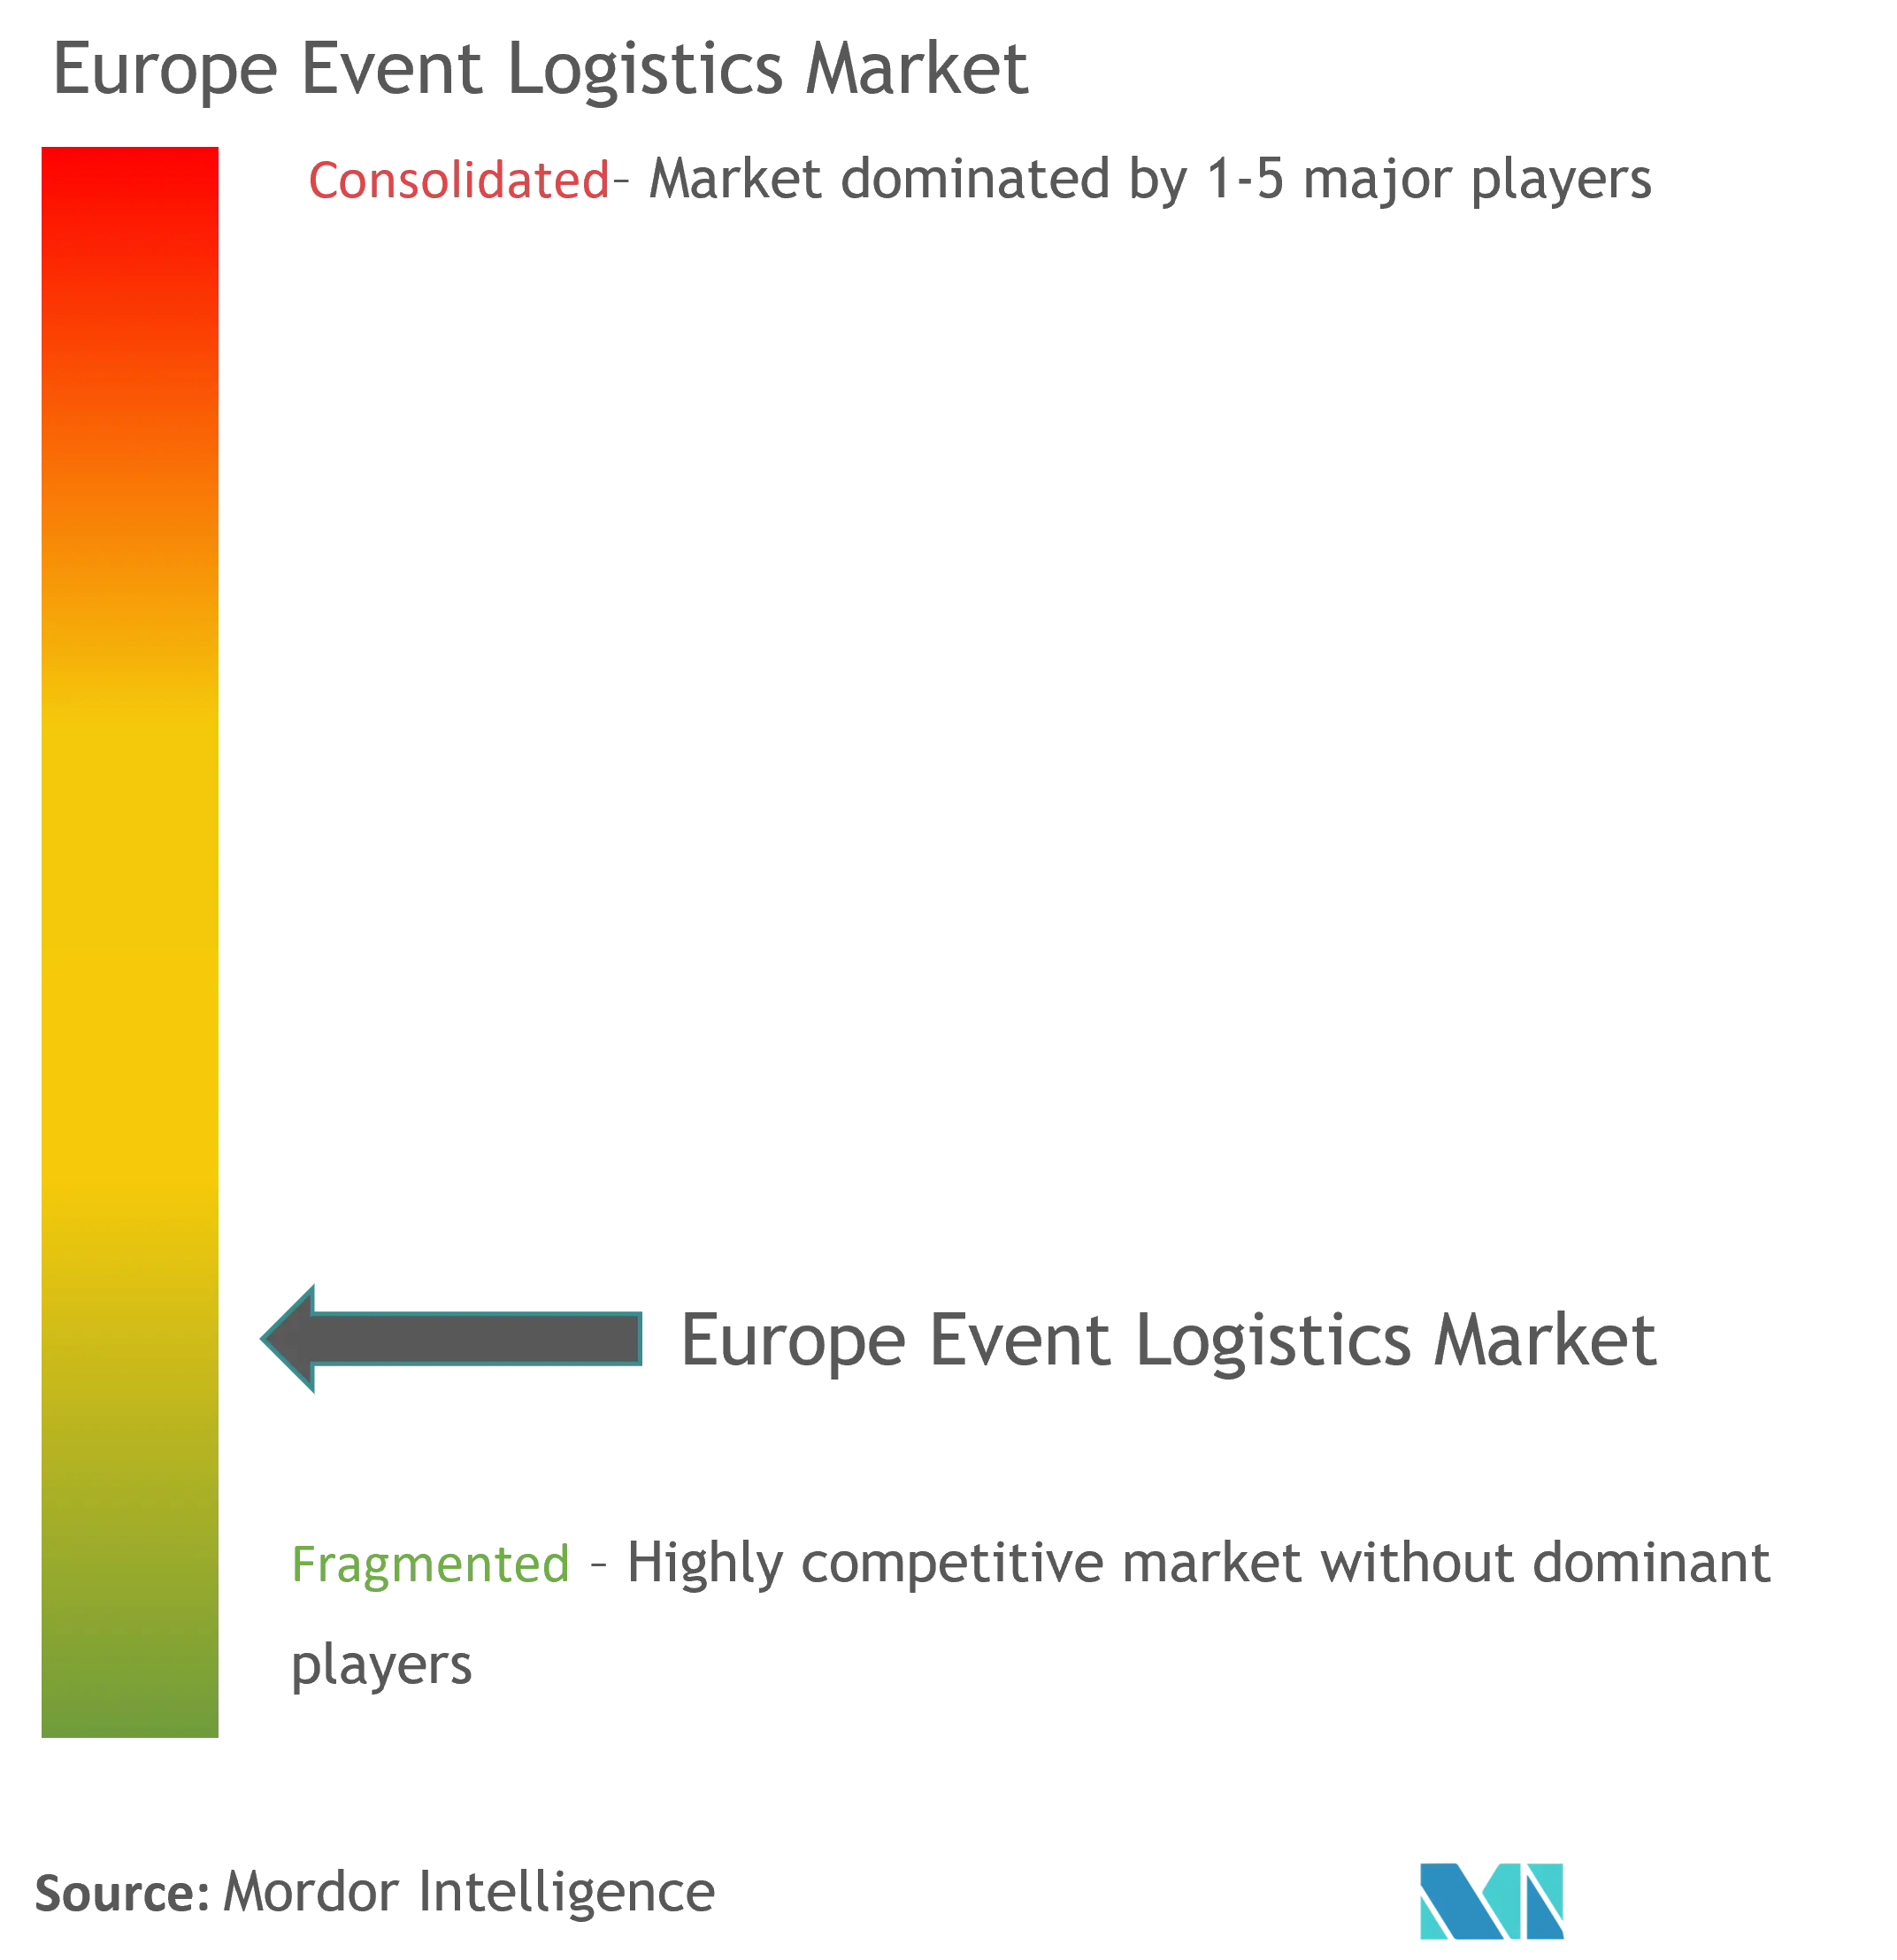 Europe Event Logistics Market Concentration